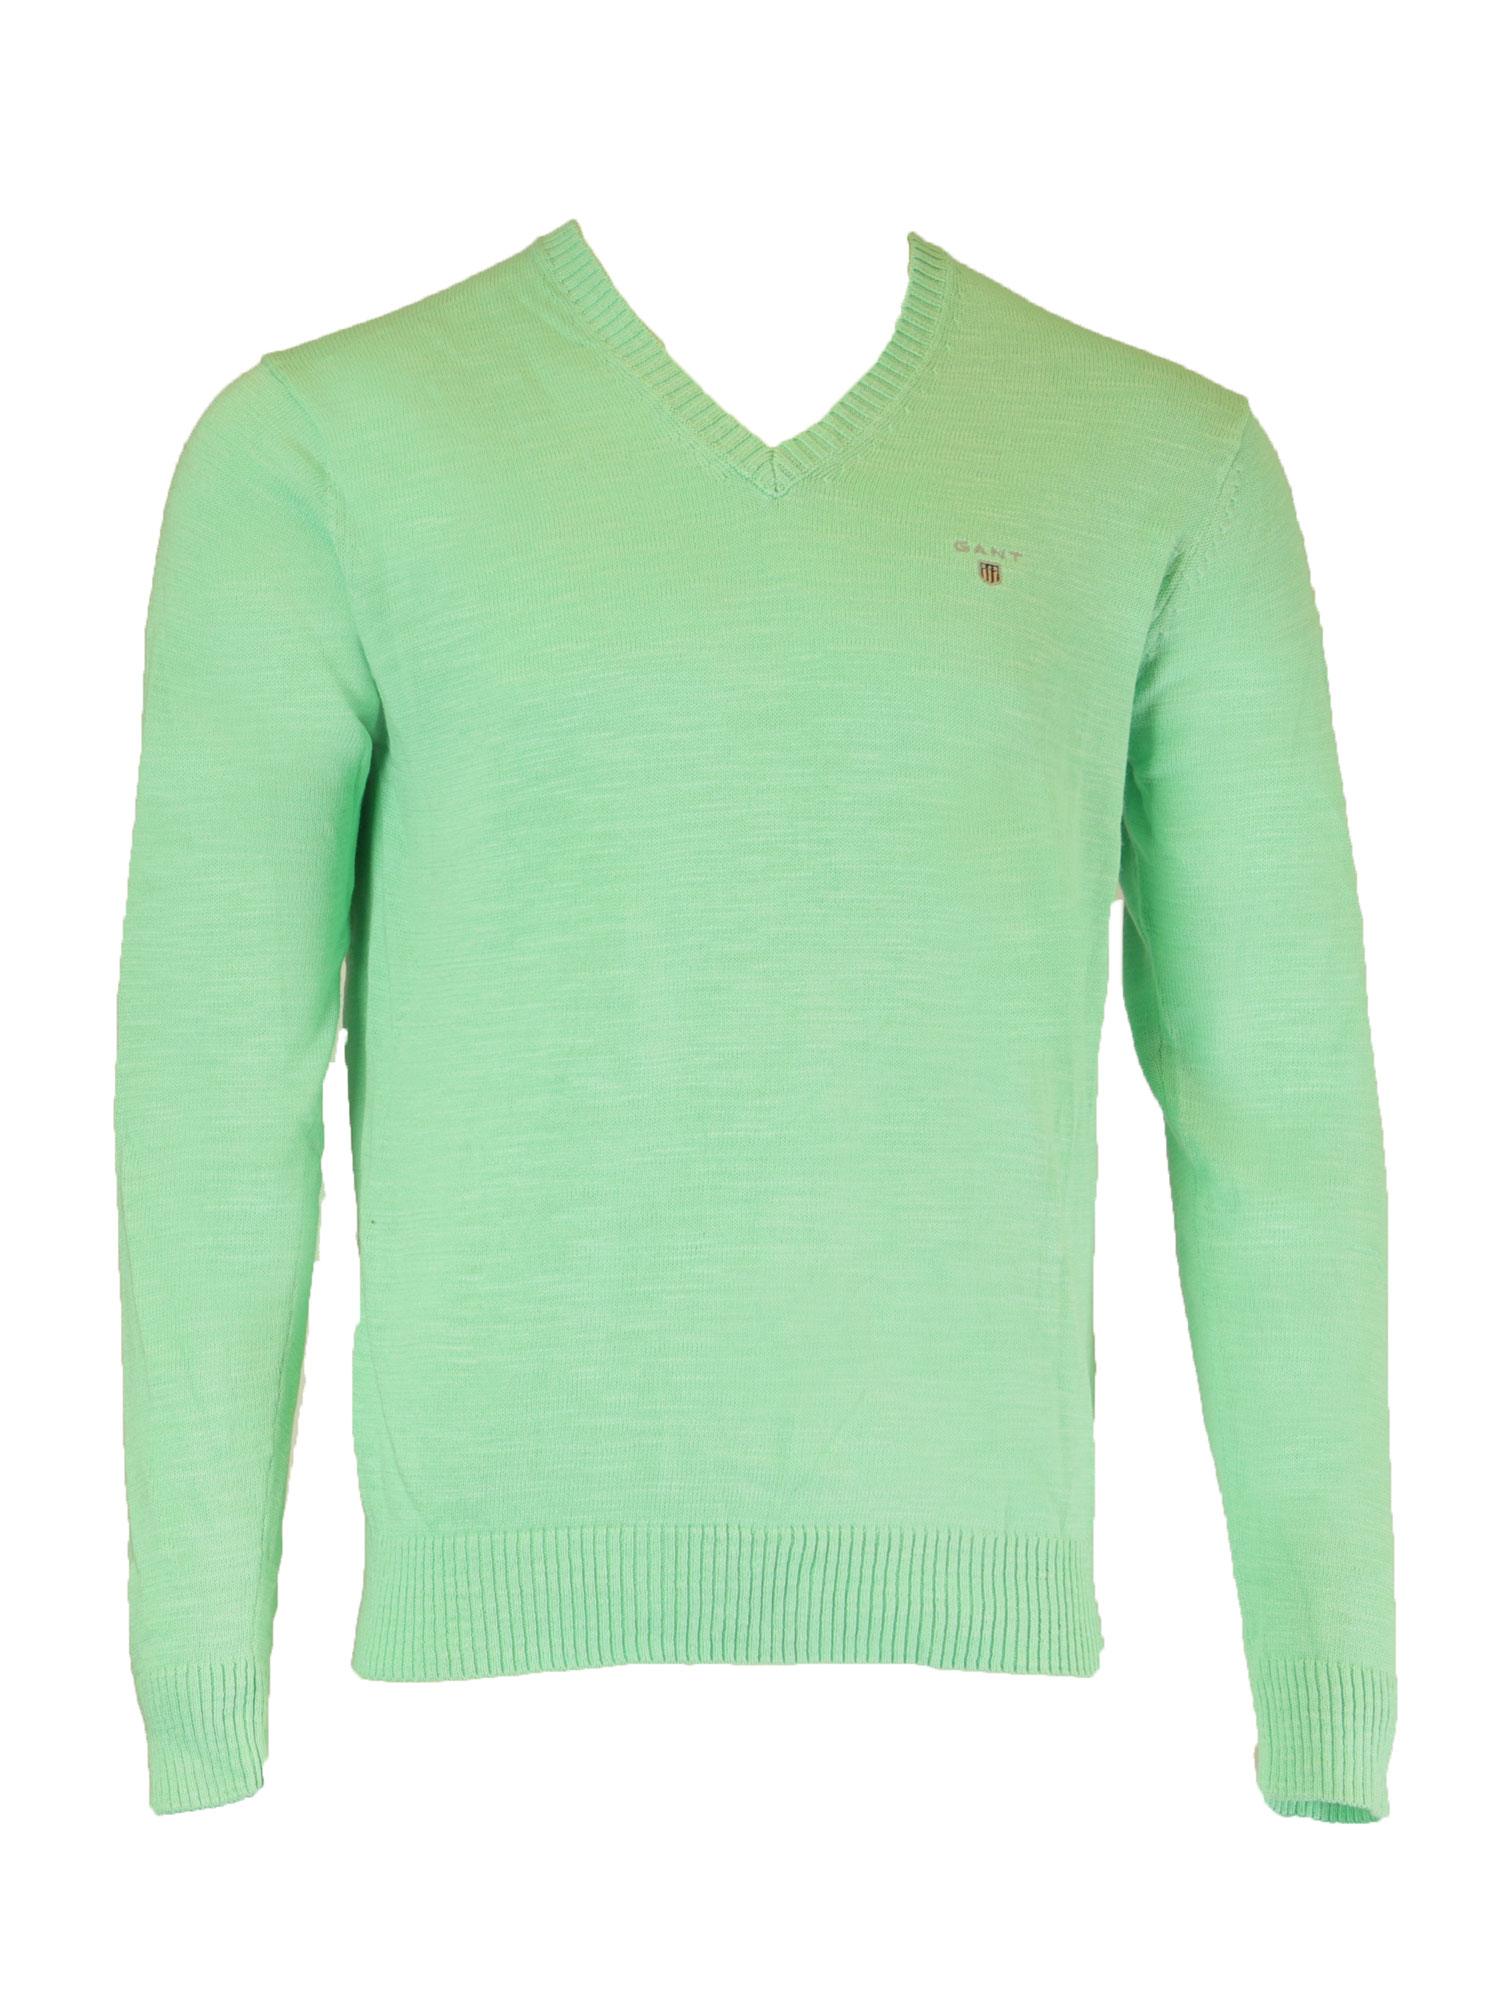 GANT Men's Paradise Green Natural Cotton V-Neck Sweater 83052 Size M ...